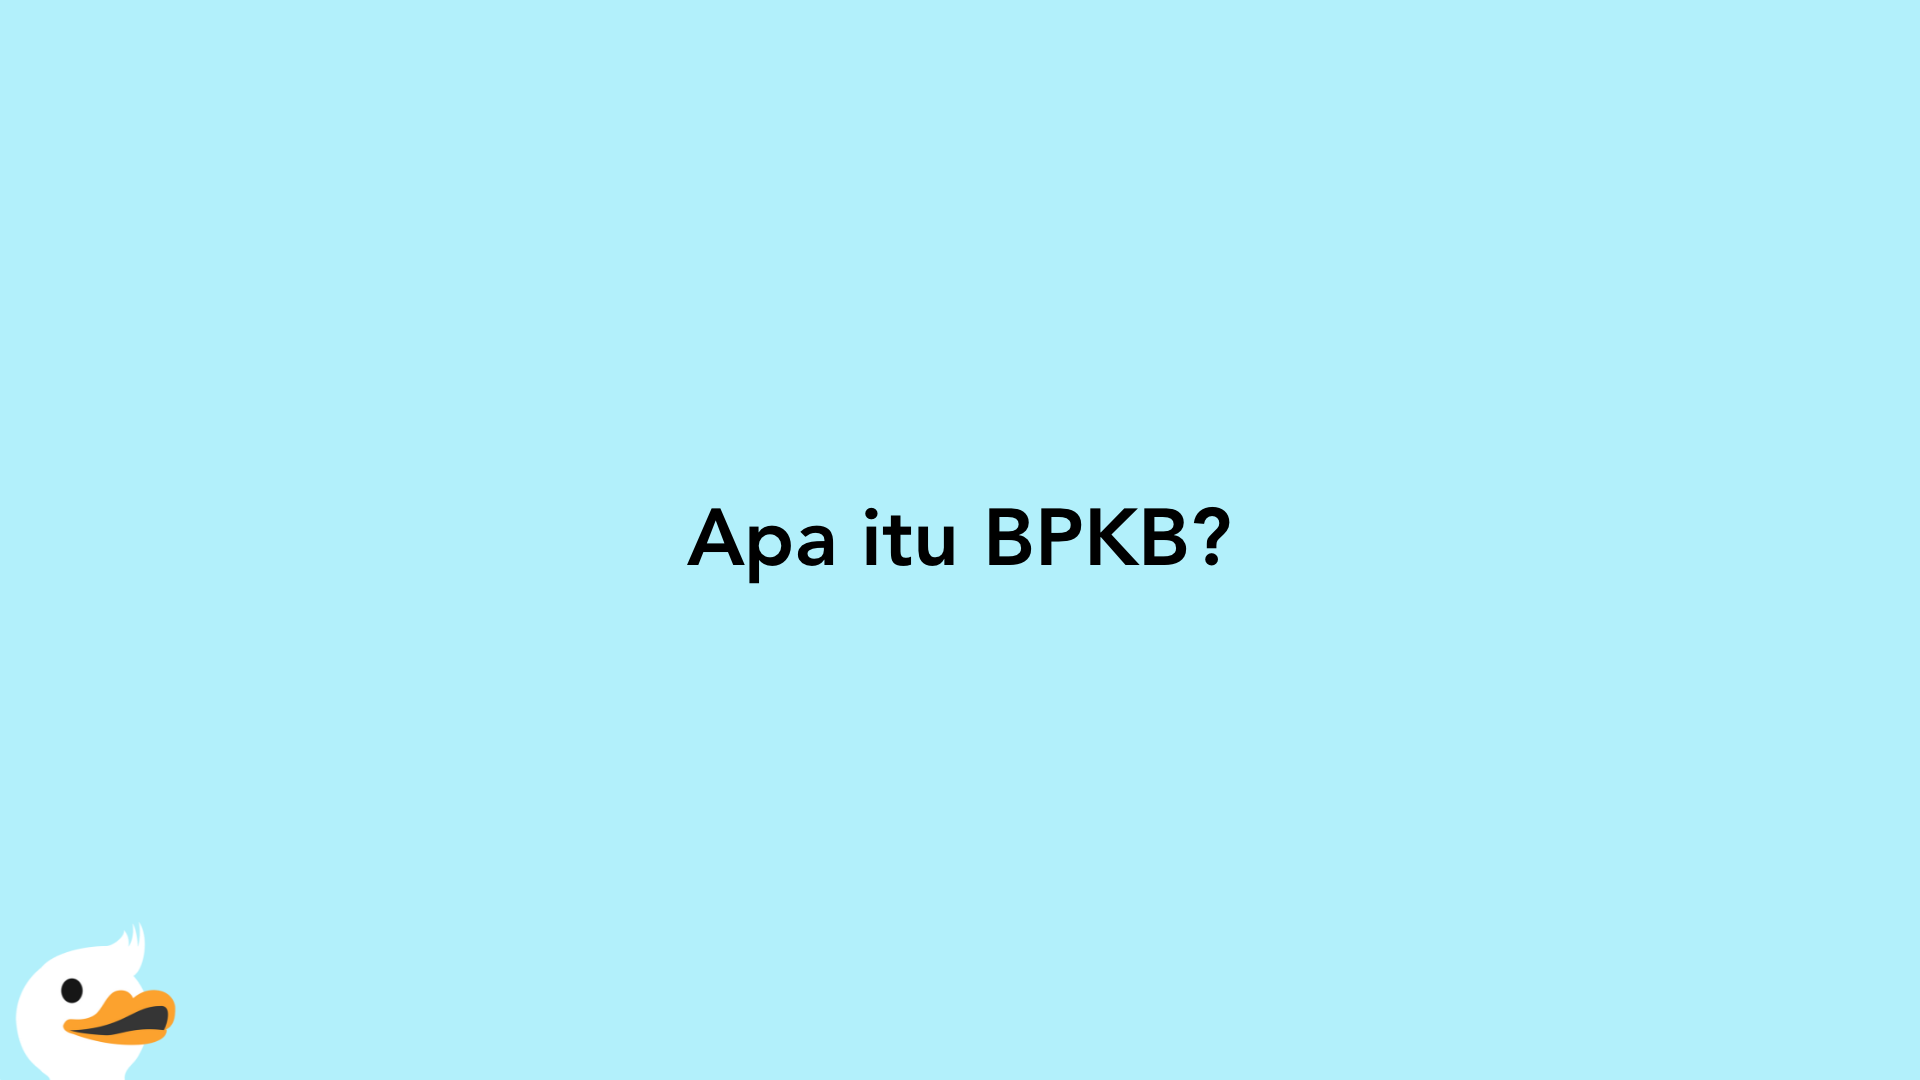 Apa itu BPKB?